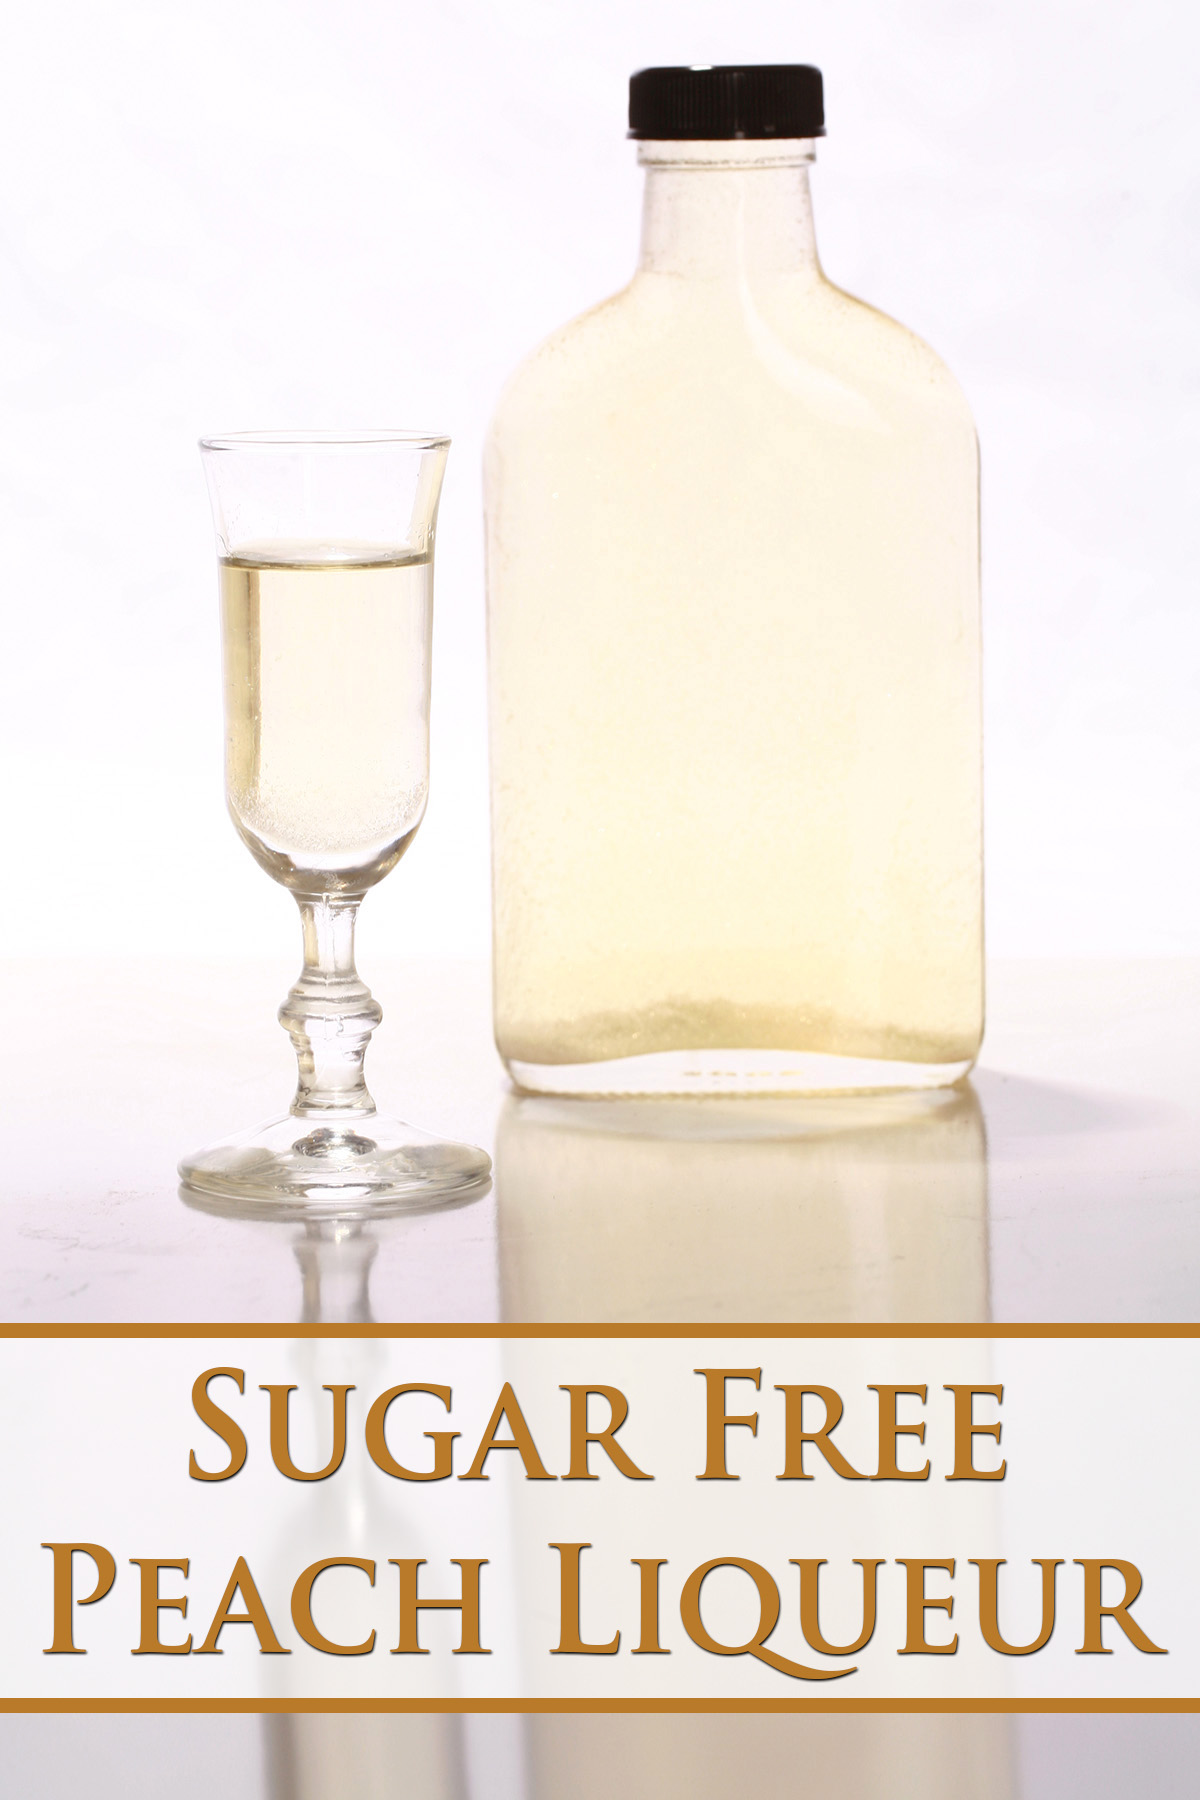 A shot glass of sugar-free peach schnapps, next to a full glass bottle of sugar free peach liqueur.